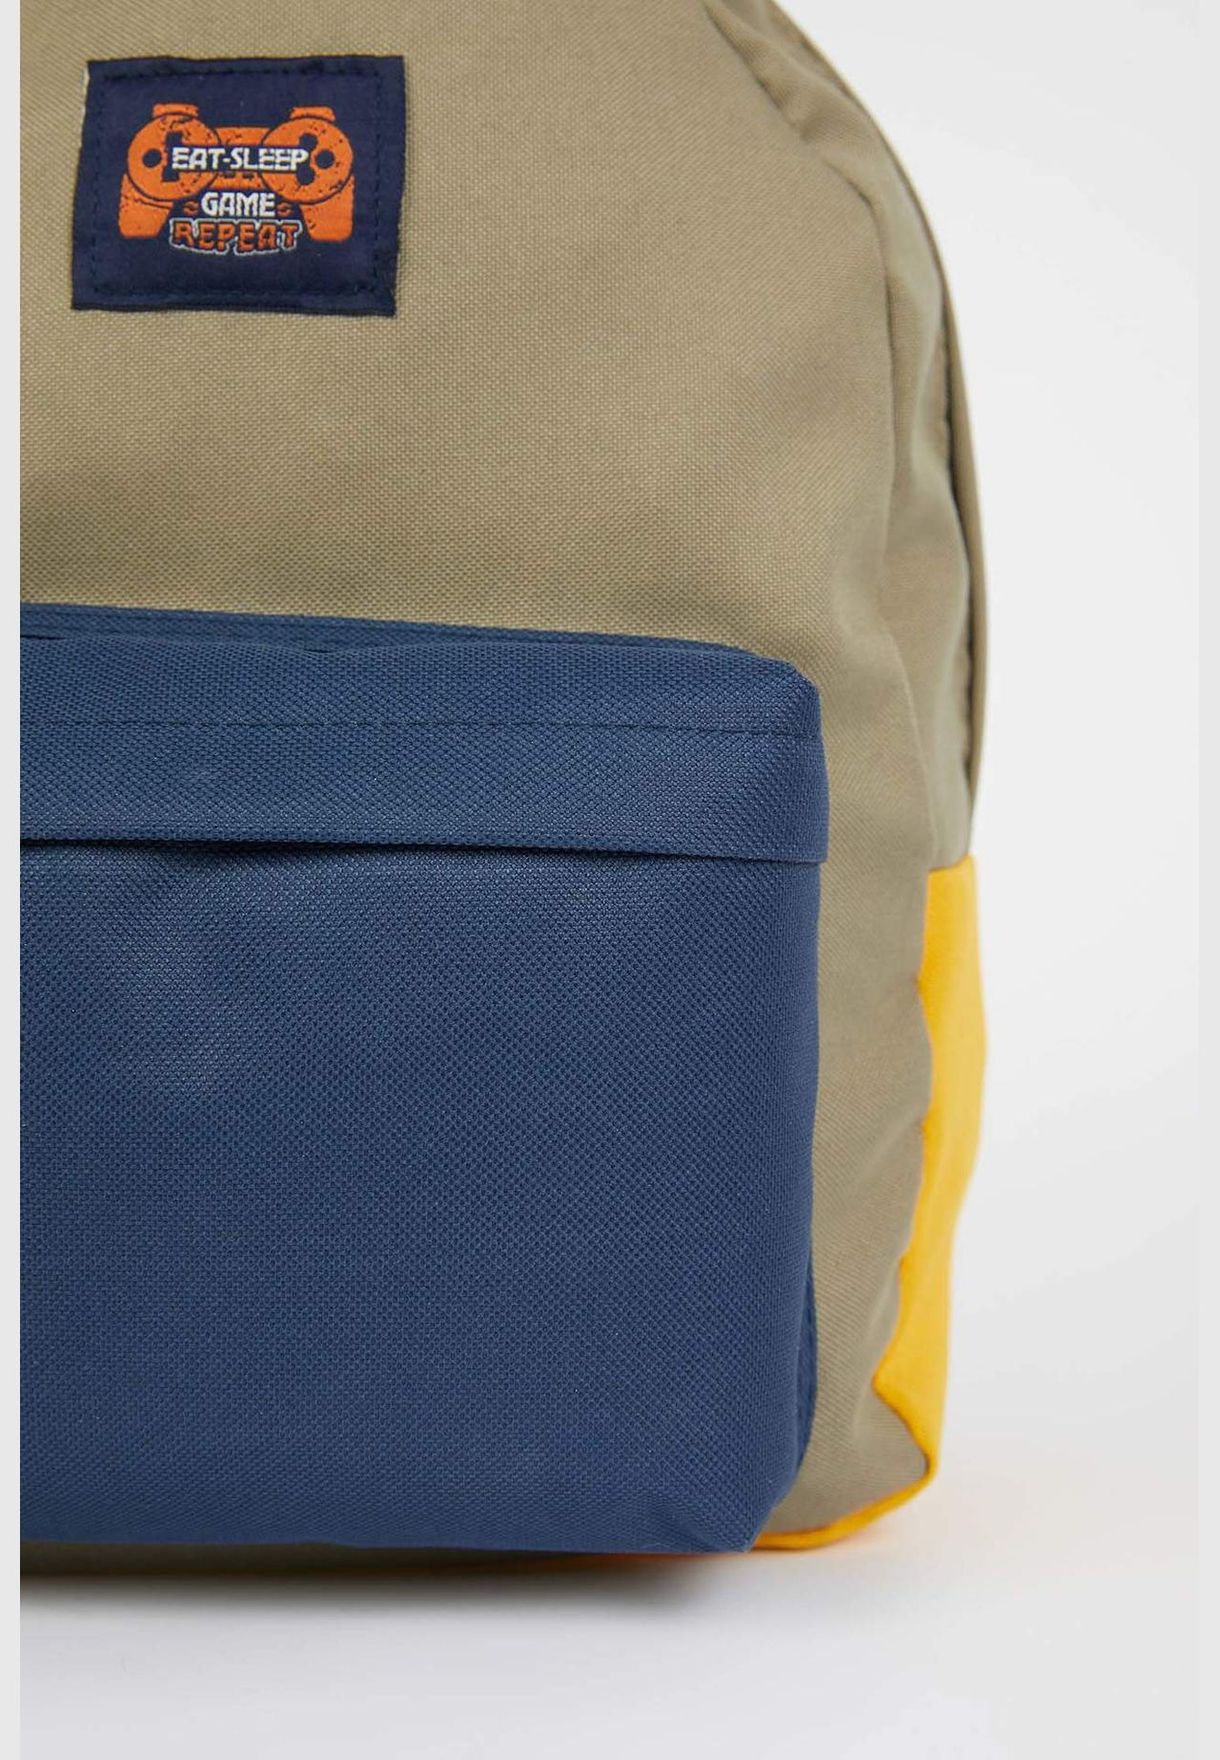 Colour Block Big Backpack